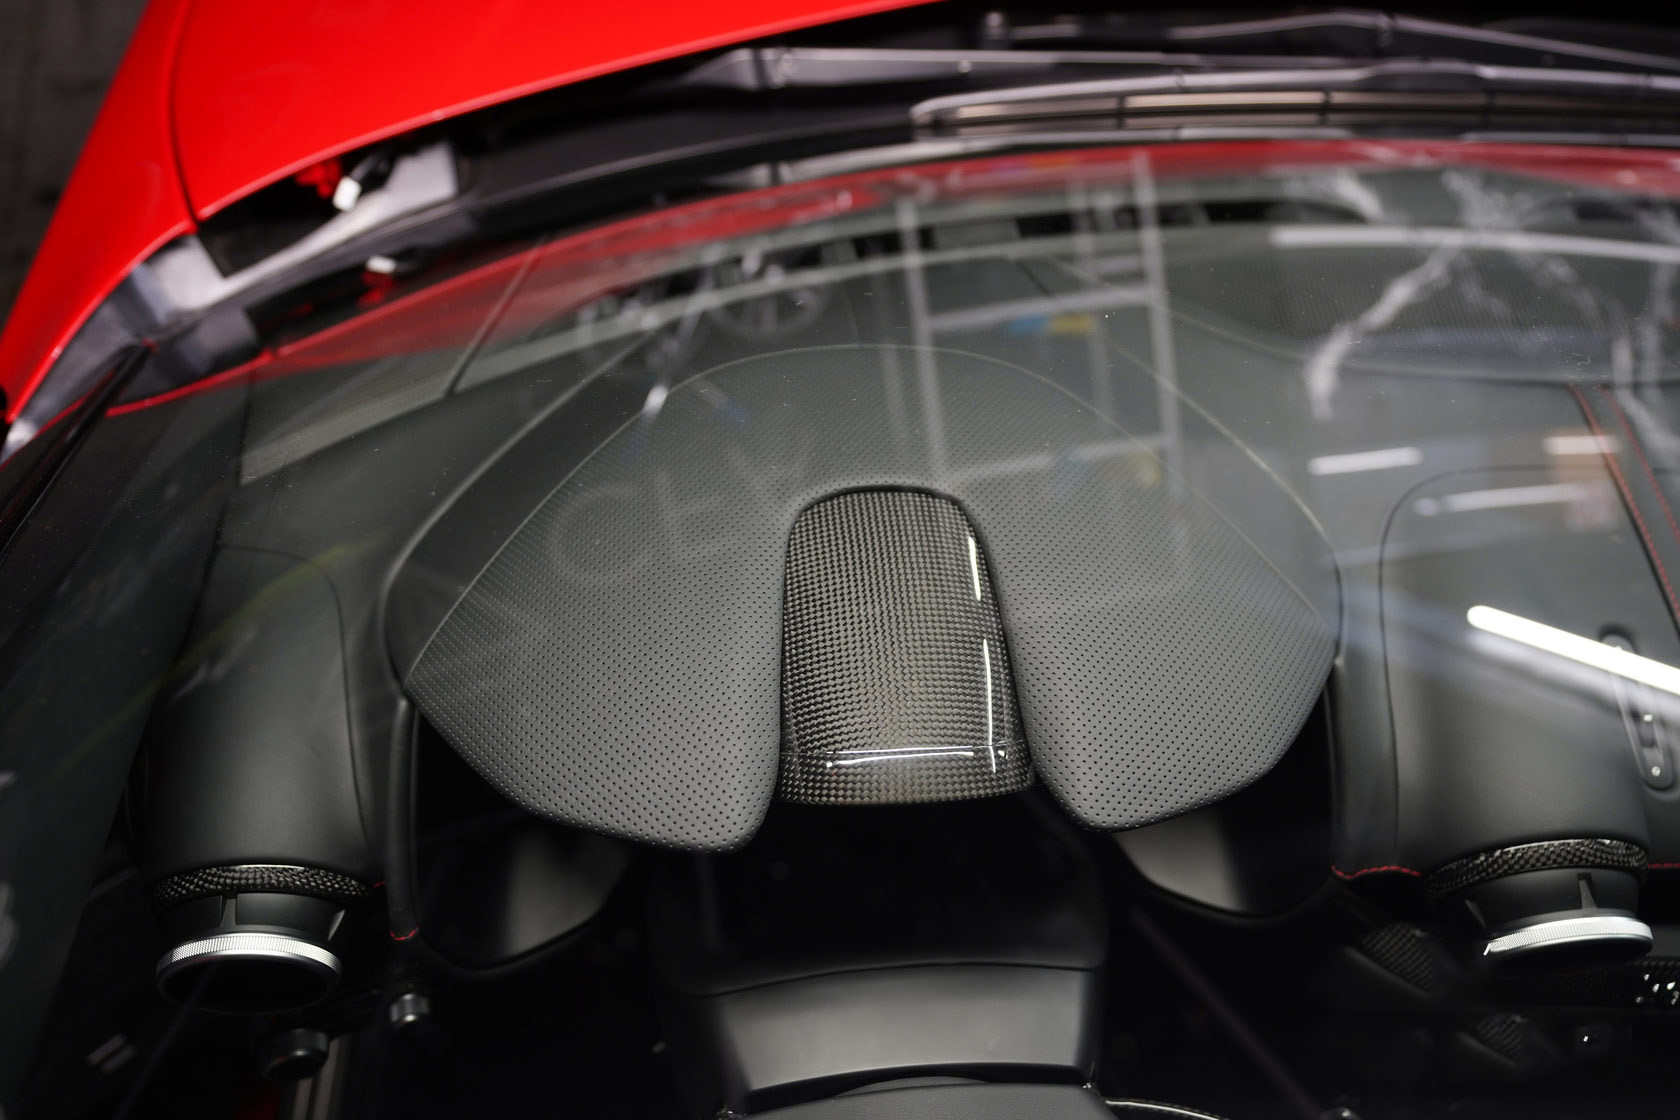 Check price and buy Forged Carbon Fiber Body kit set for Ferrari Portofino